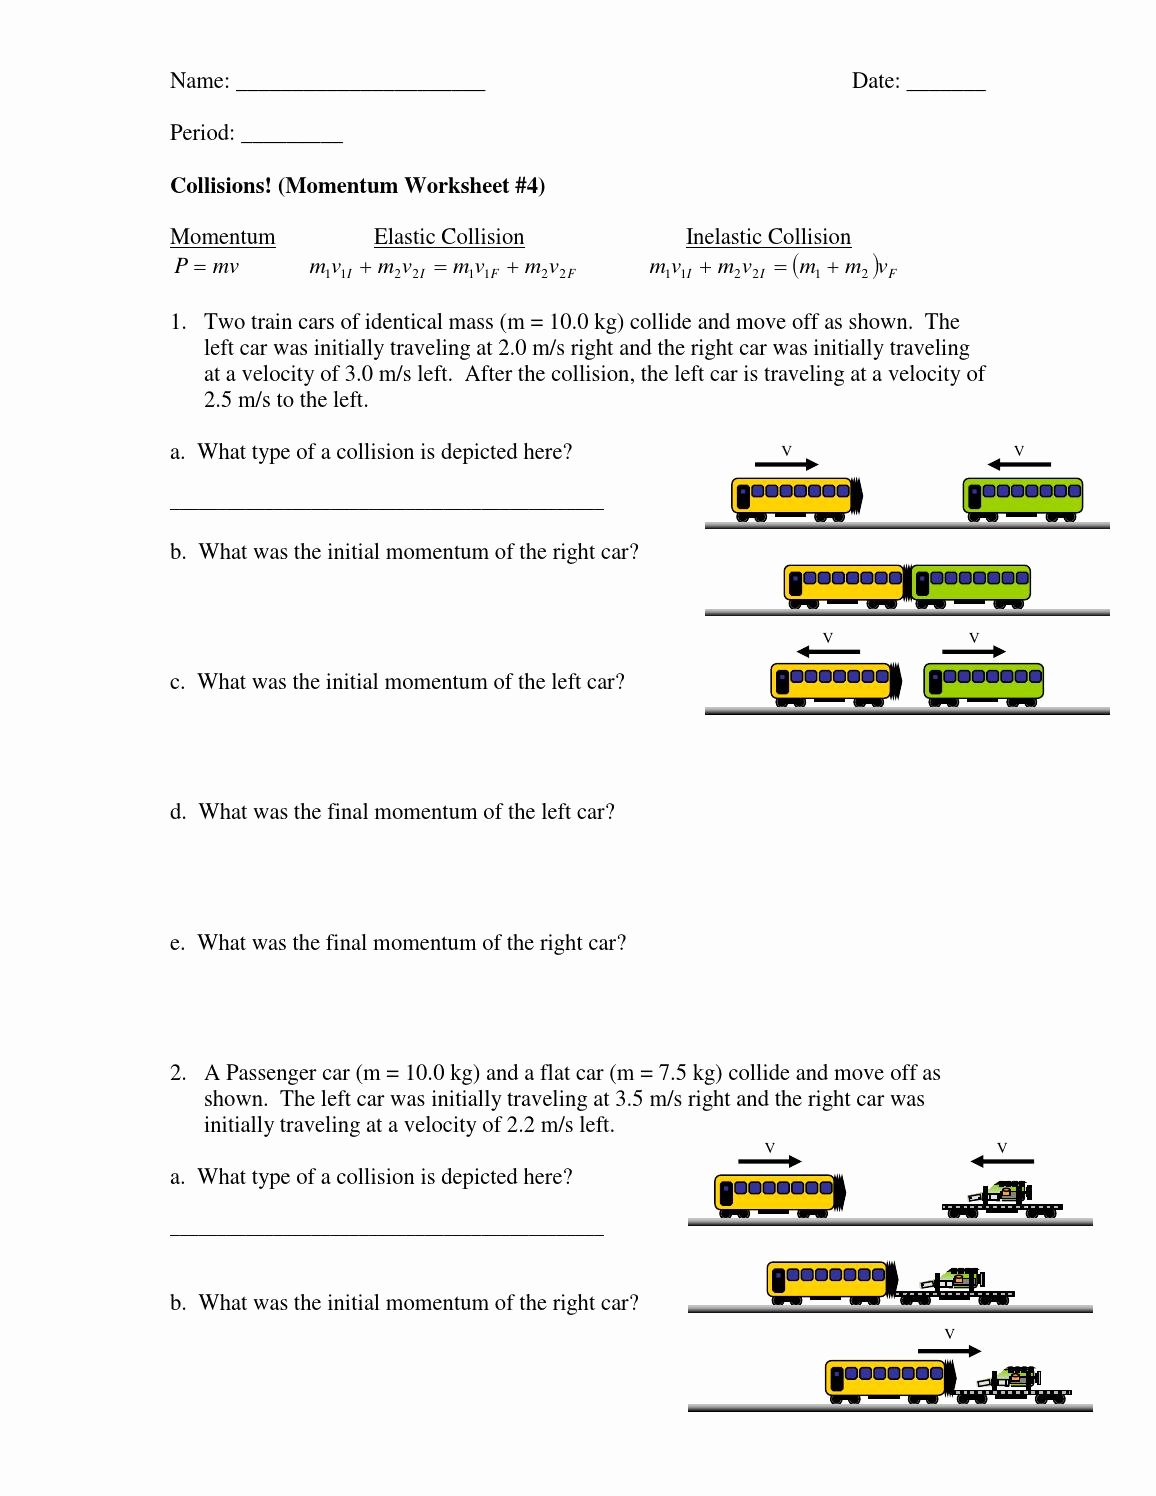 Momentum Worksheet Answer Key Elegant Inelastic Collisions Worksheet Student by Emlyn Majoos issuu